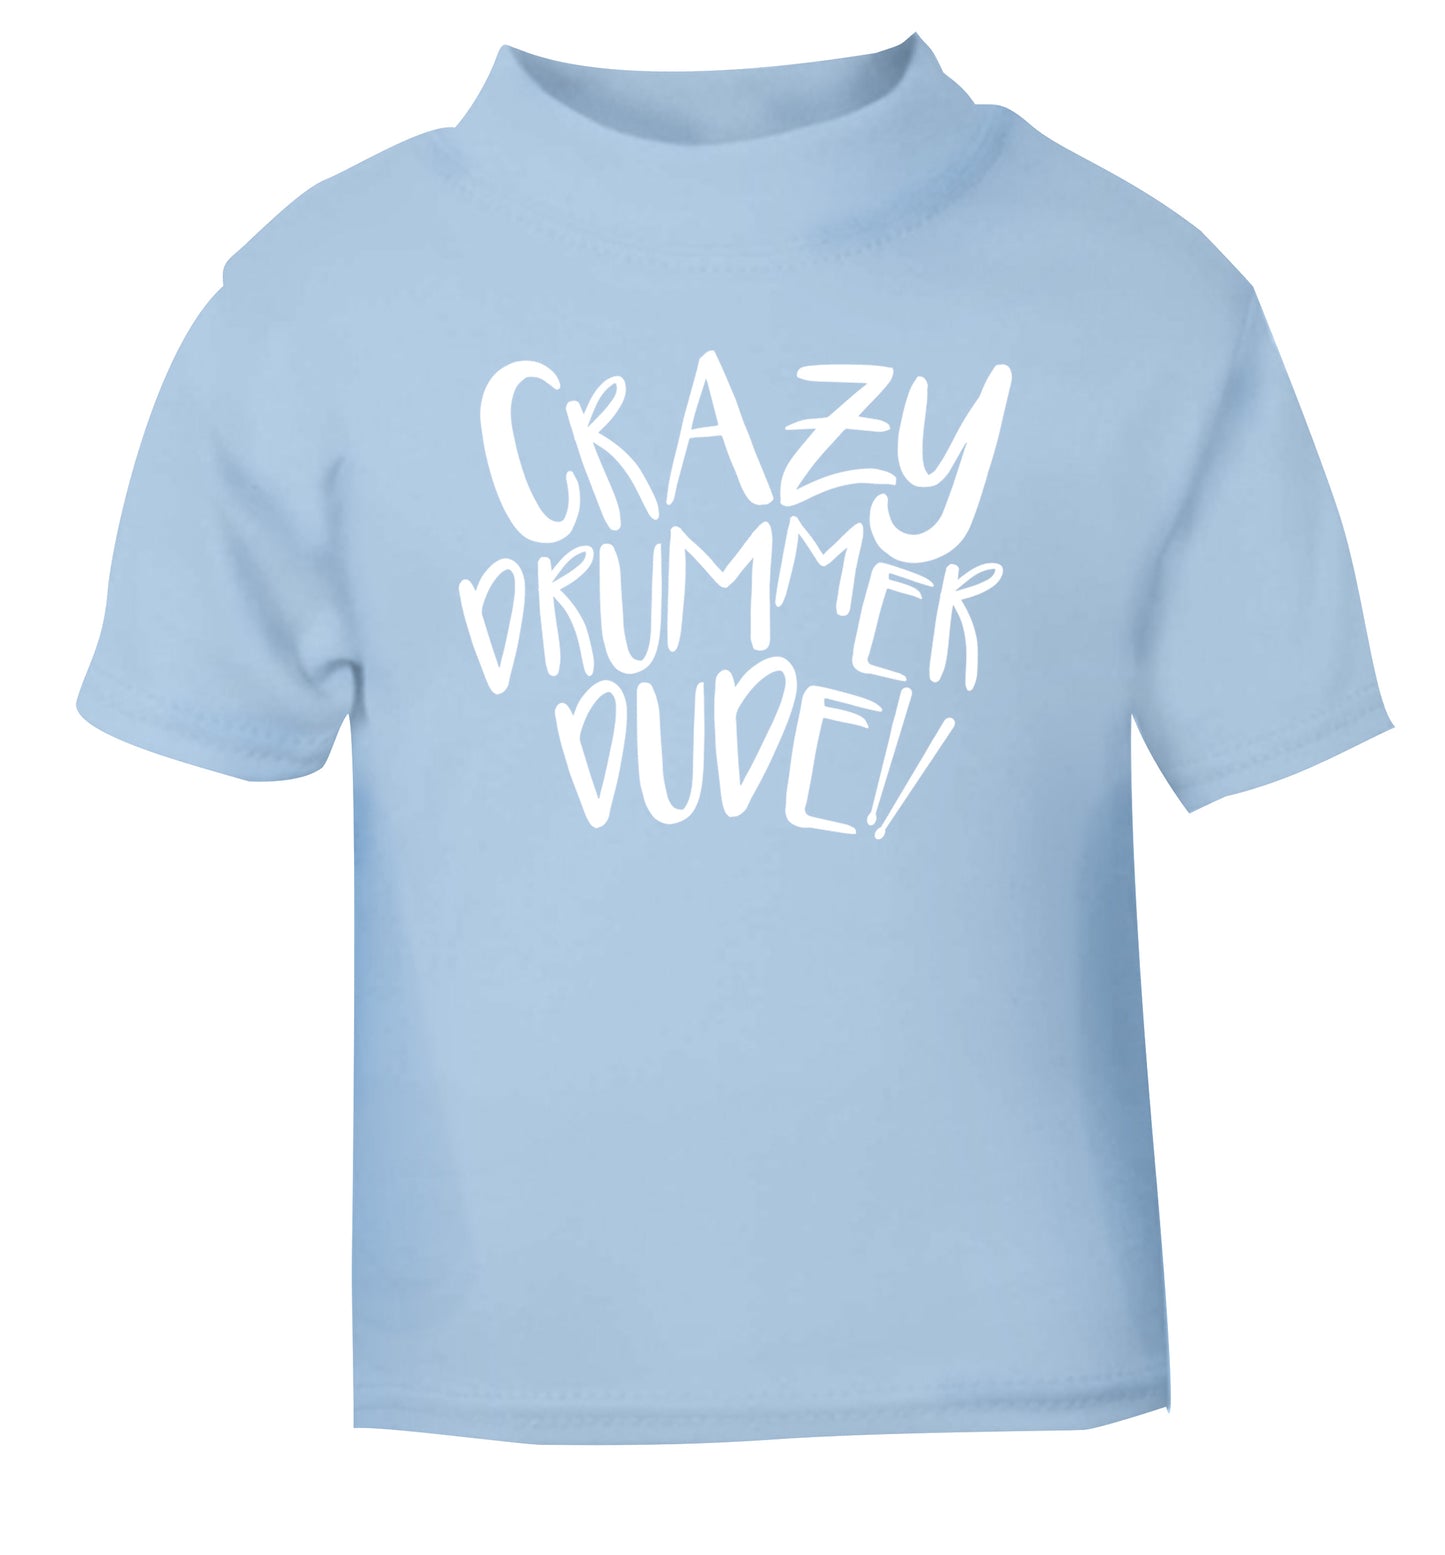 Crazy drummer dude light blue Baby Toddler Tshirt 2 Years